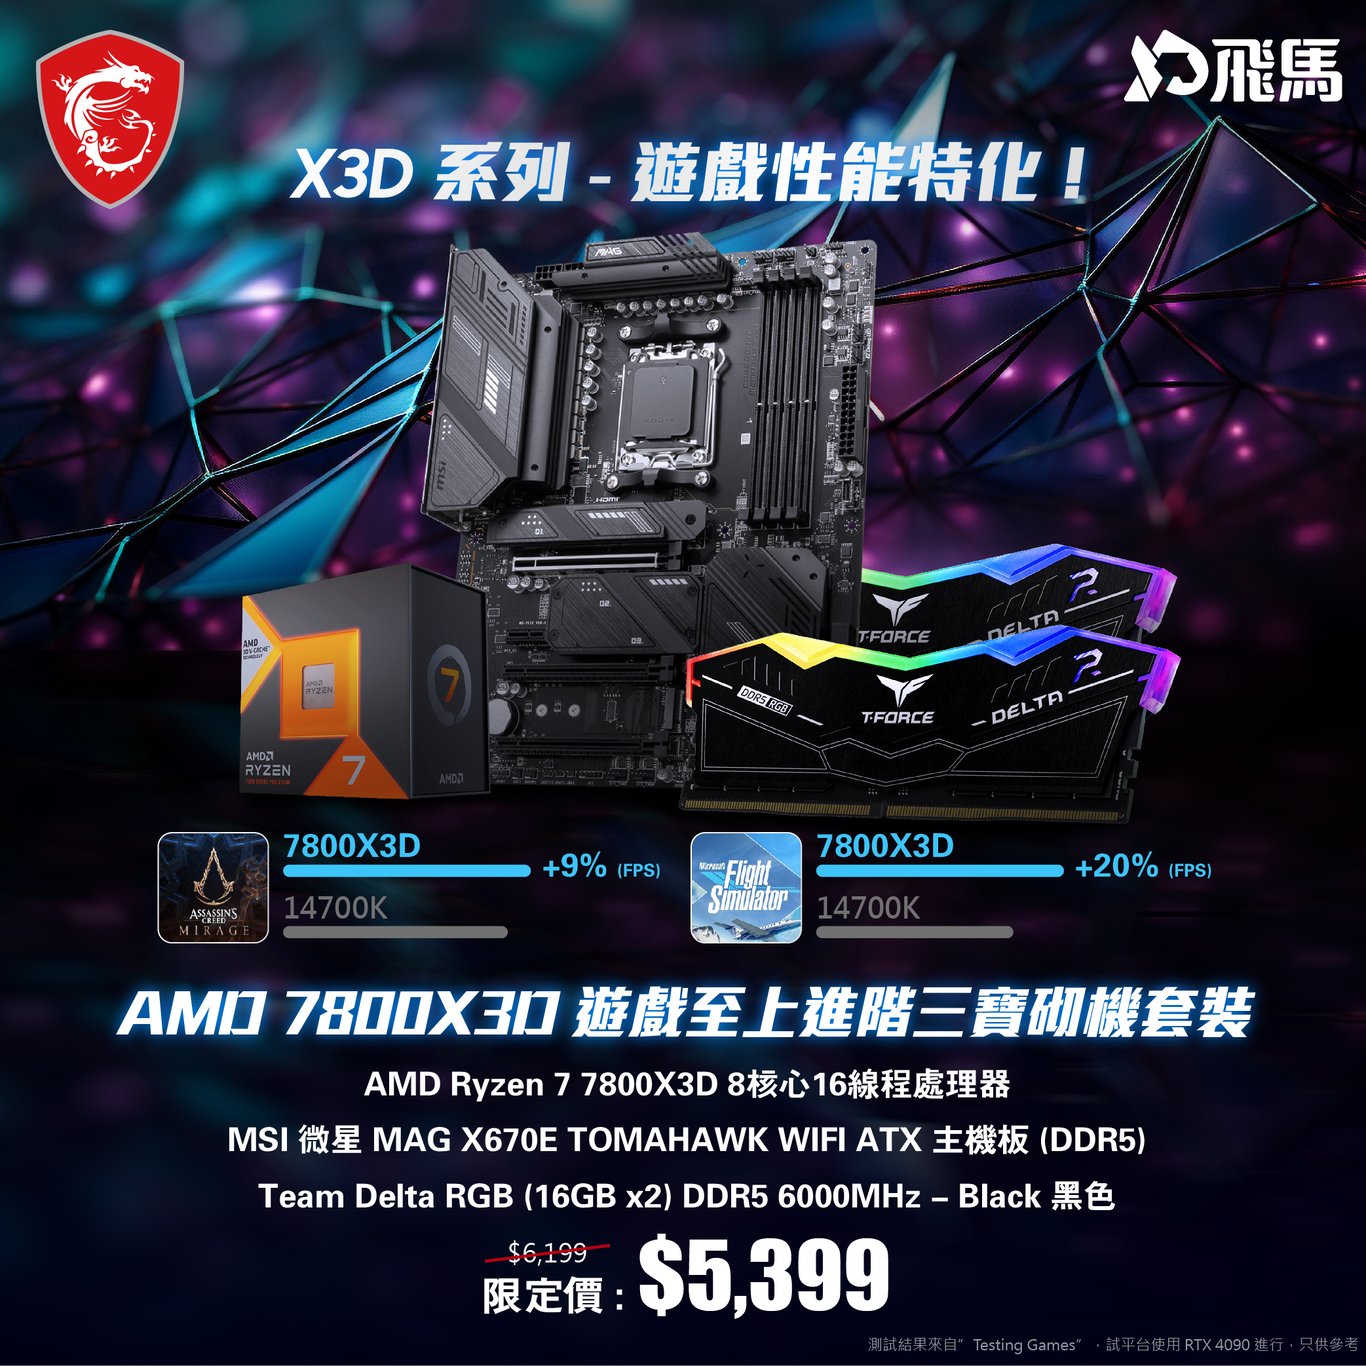 MSI AMD 7800X3D 